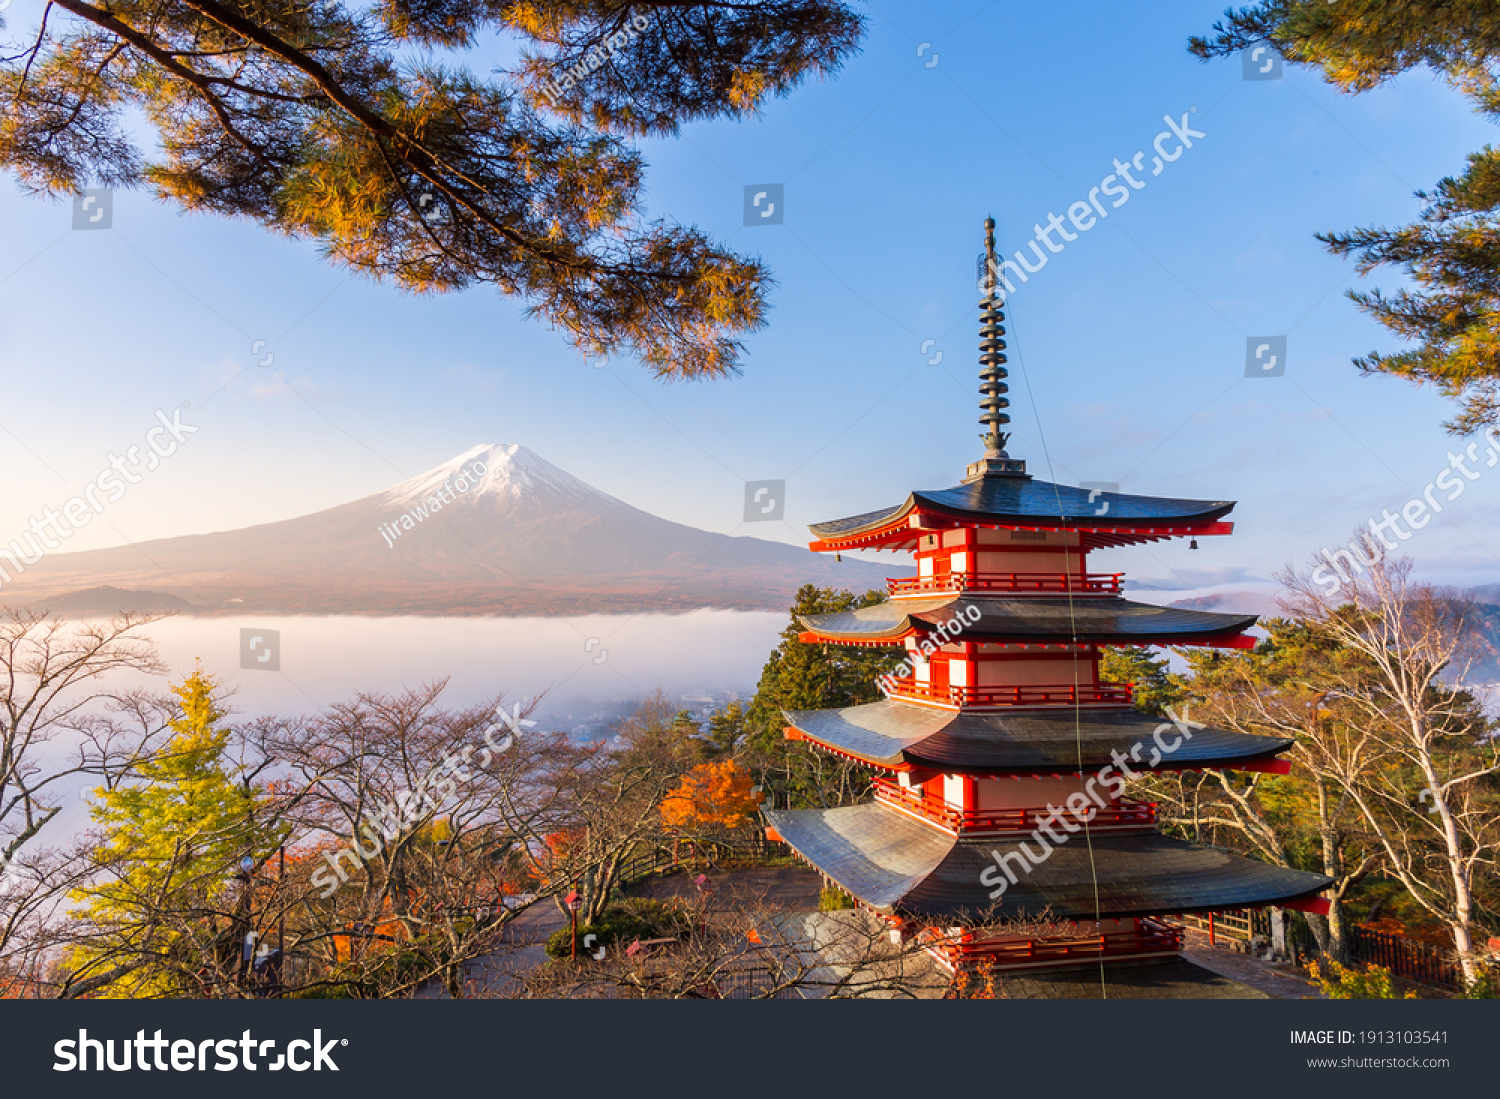 Rare scene of Chureito pagoda and Mount Fuji with morning fog, Japan in autumn #1913103541